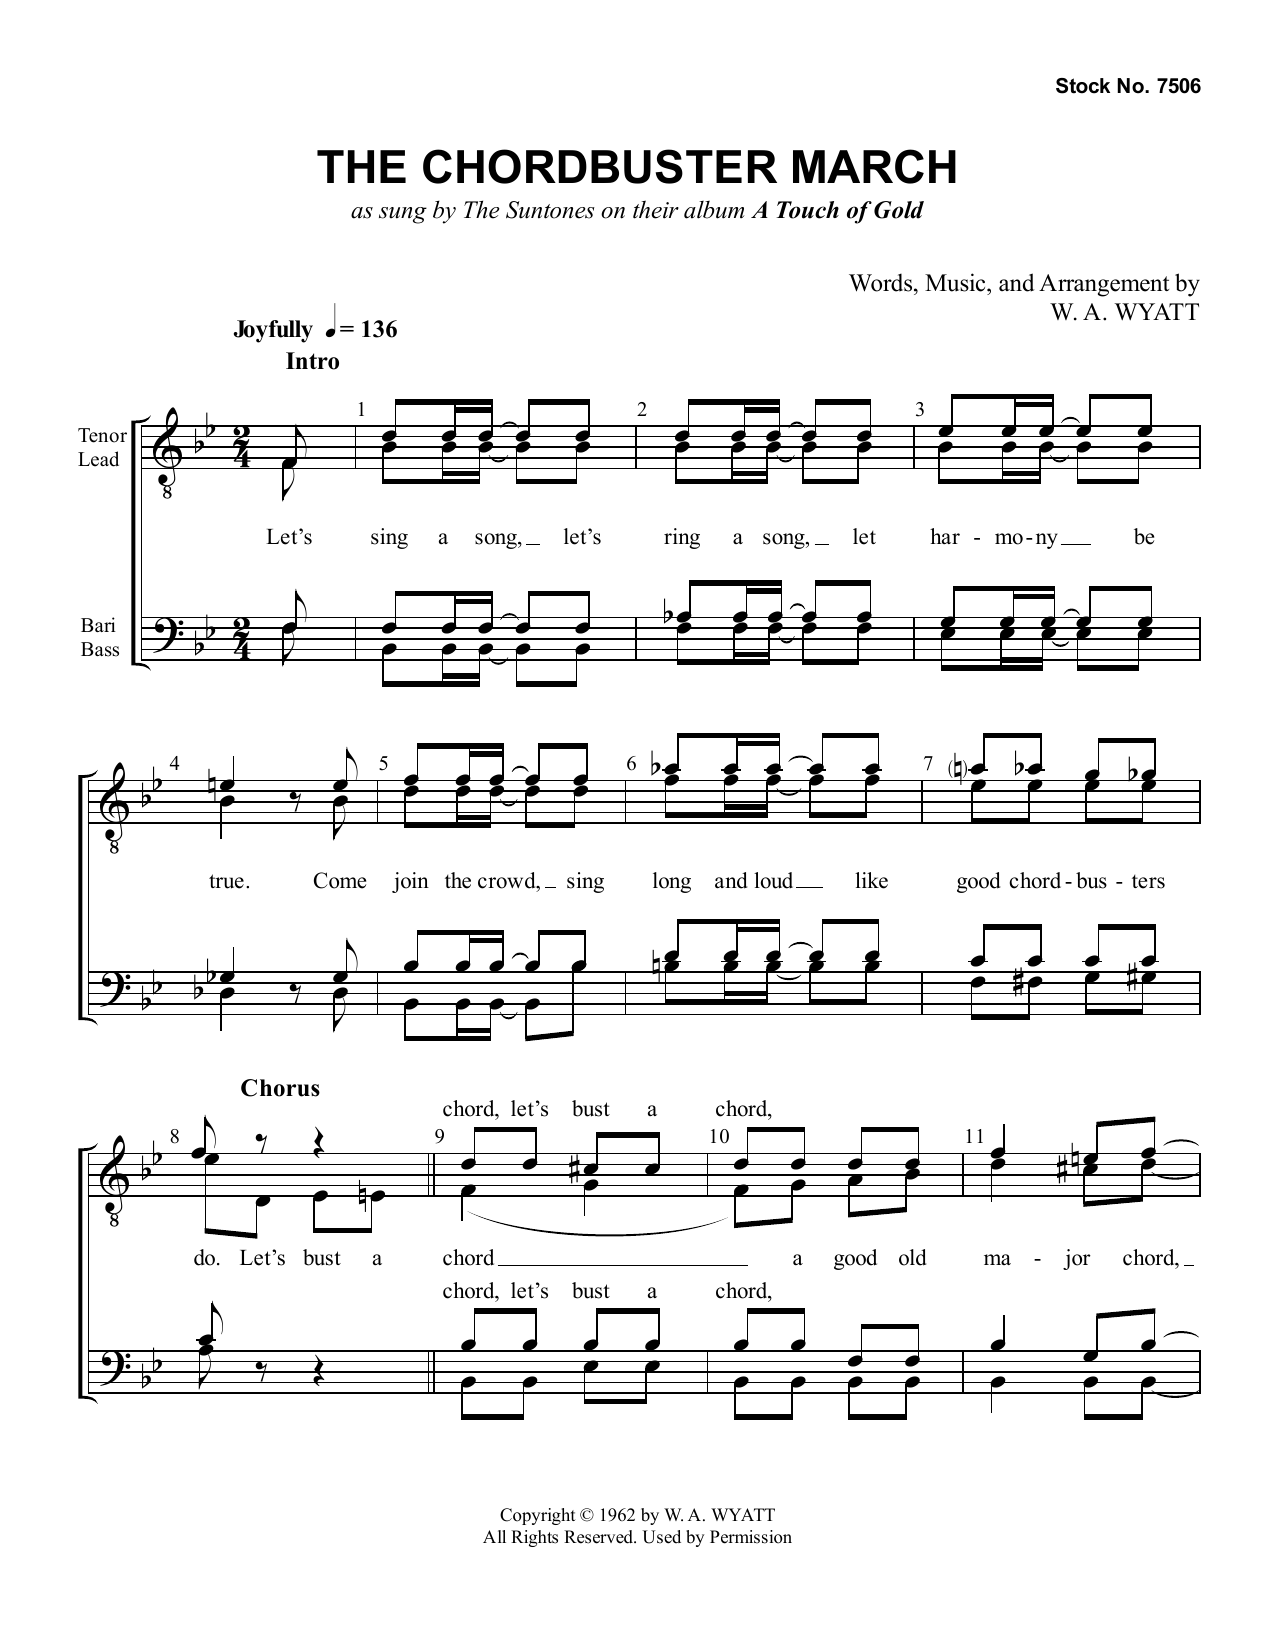 The Suntones The Chordbuster March Sheet Music Notes & Chords for TTBB Choir - Download or Print PDF